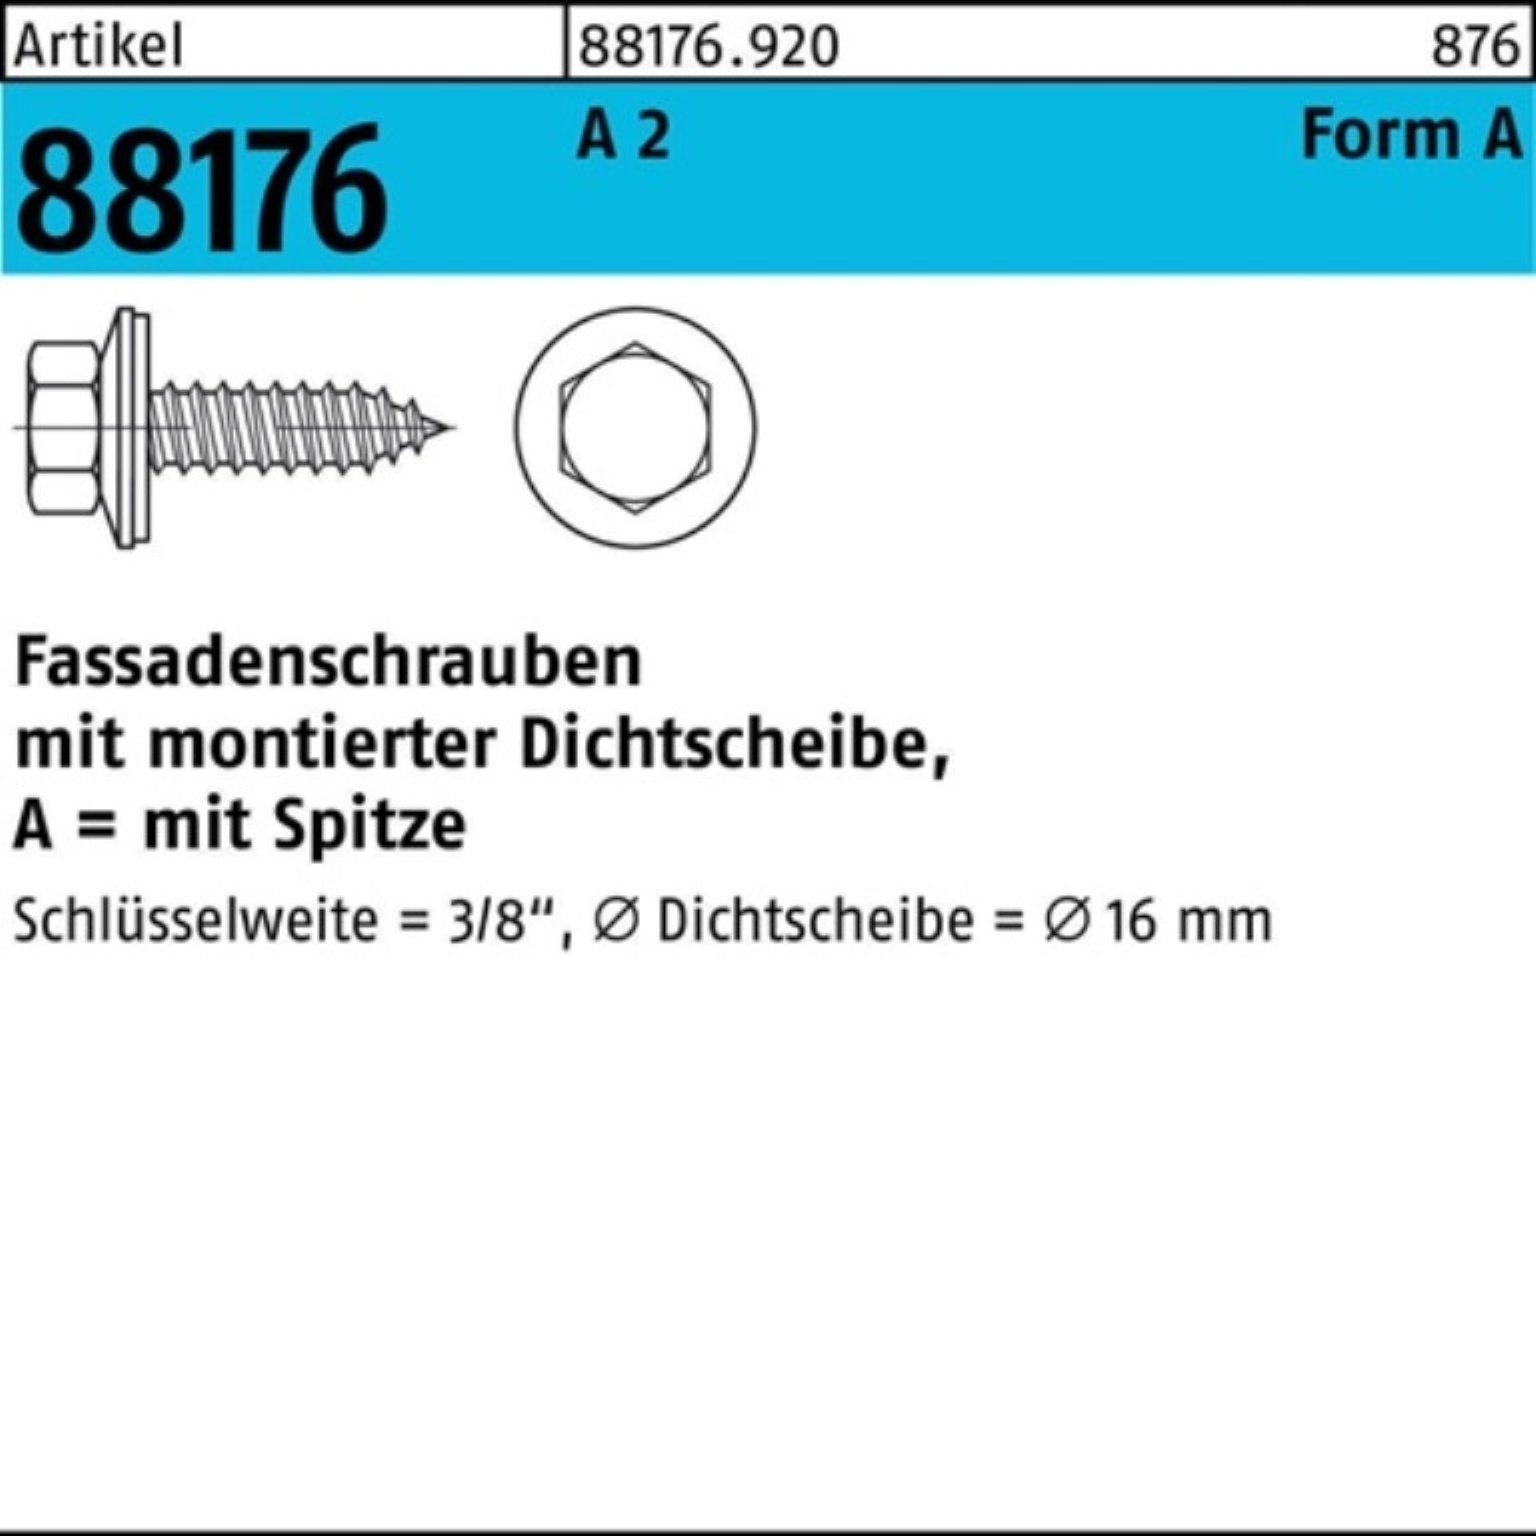 88176 Pack Dichtscheibe/Spitze 200er 6,5x 64 R Fassadenschraube A 2 A Fassadenschraube Reyher